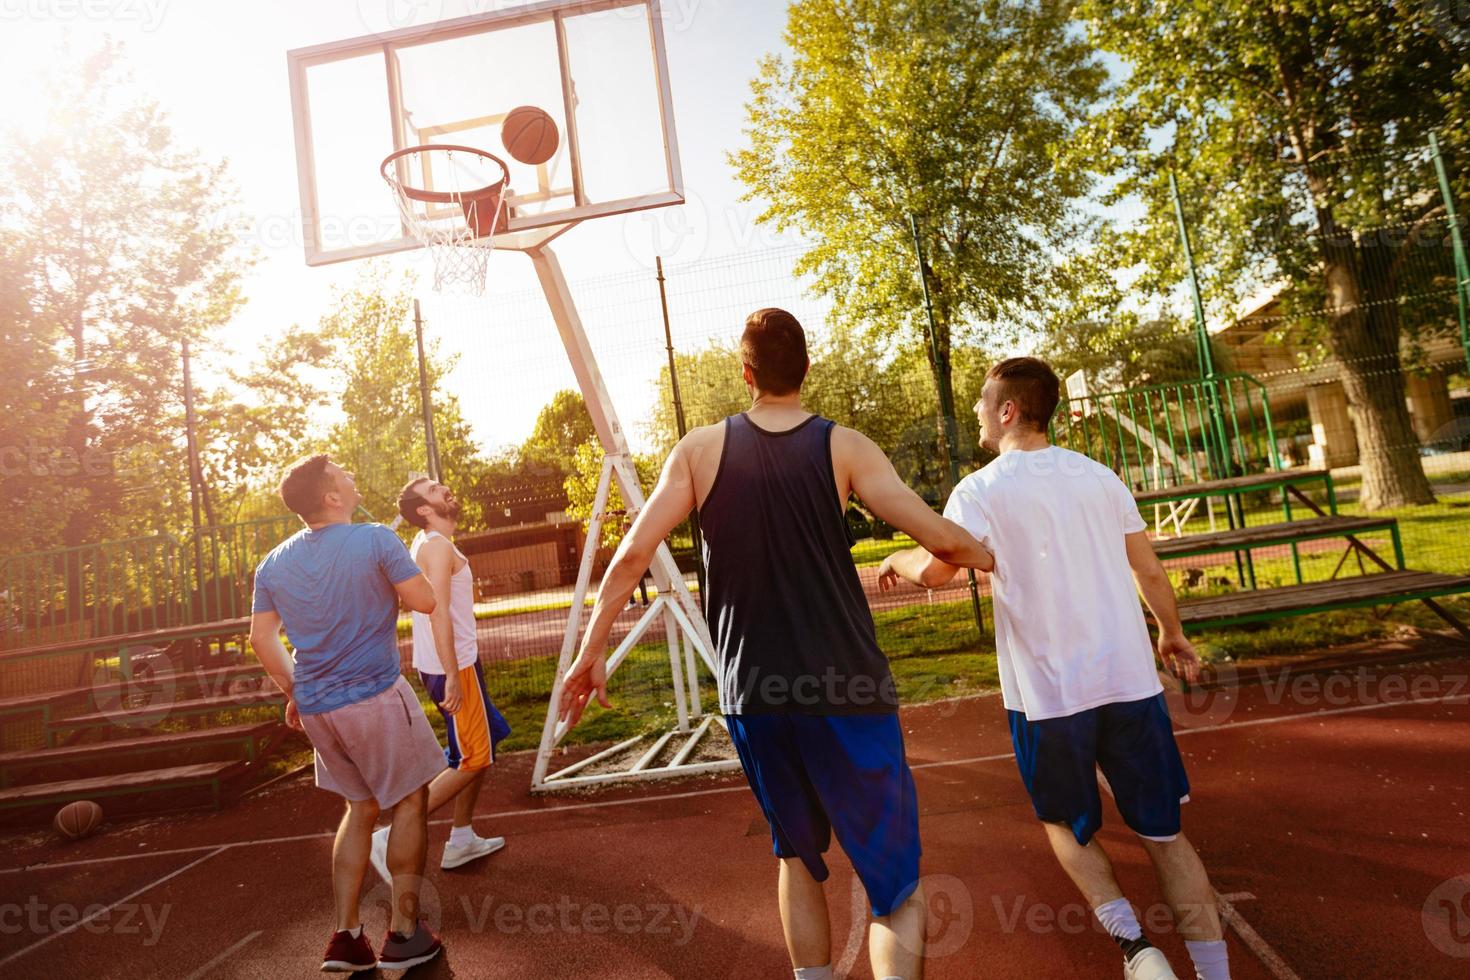 Street Basketball view photo